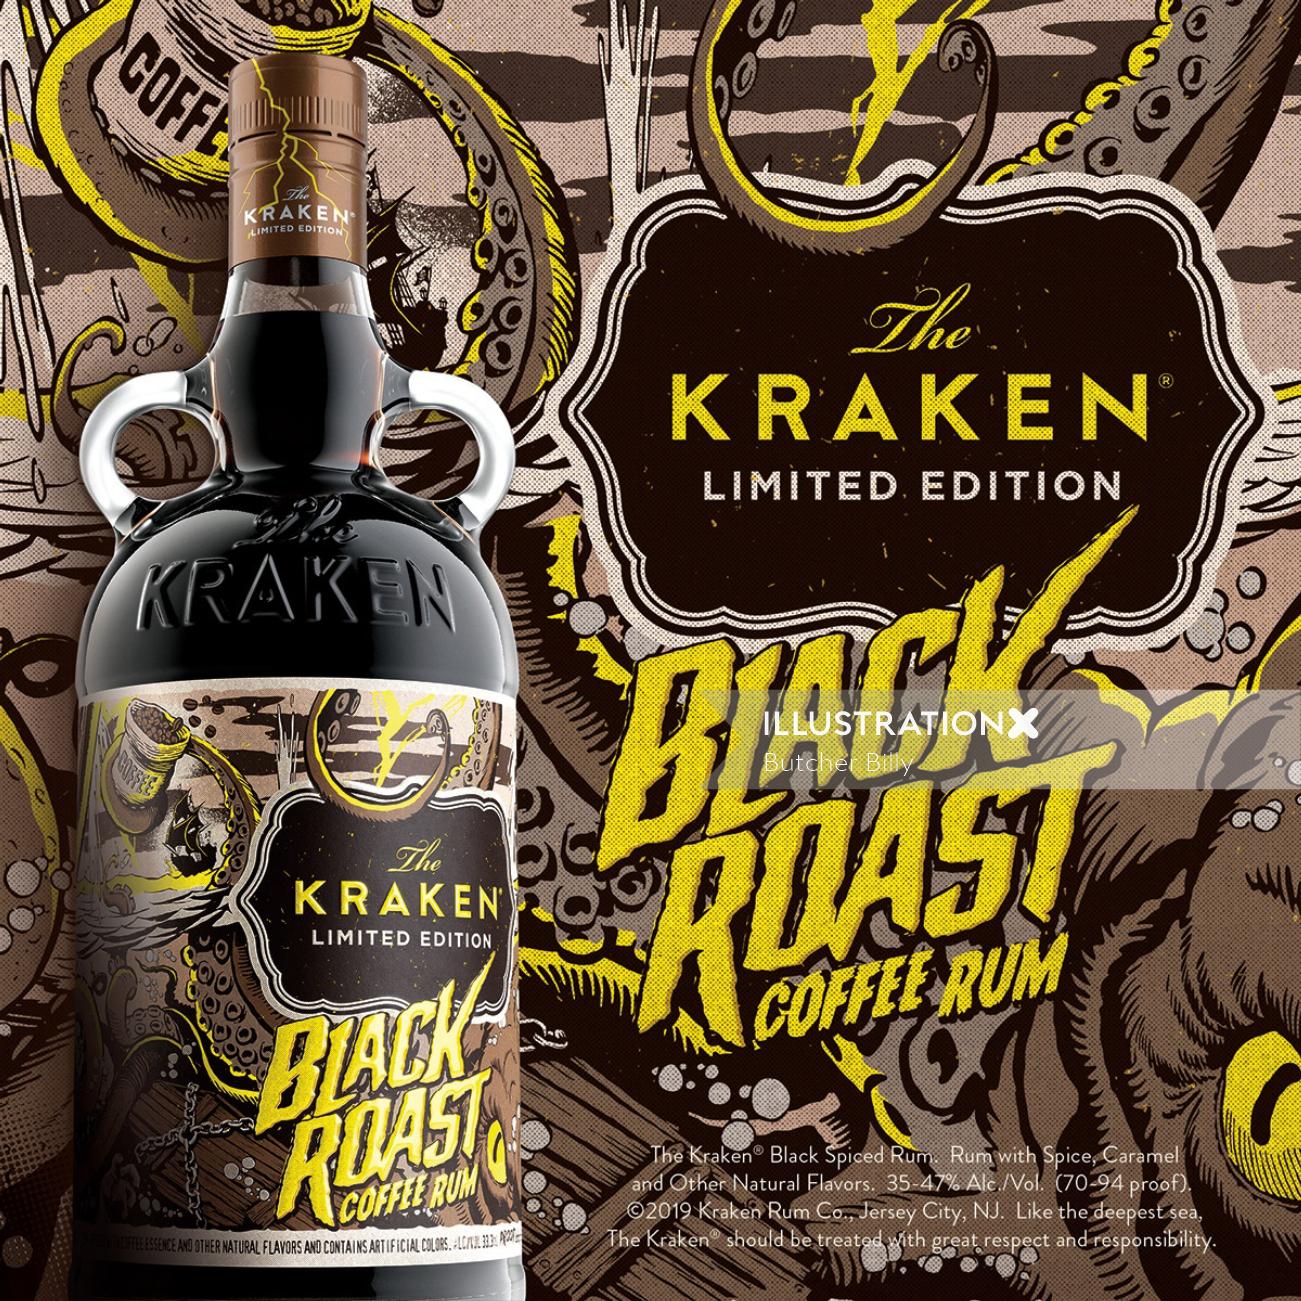 Label design for Kraken's Black Roast Coffee Rum